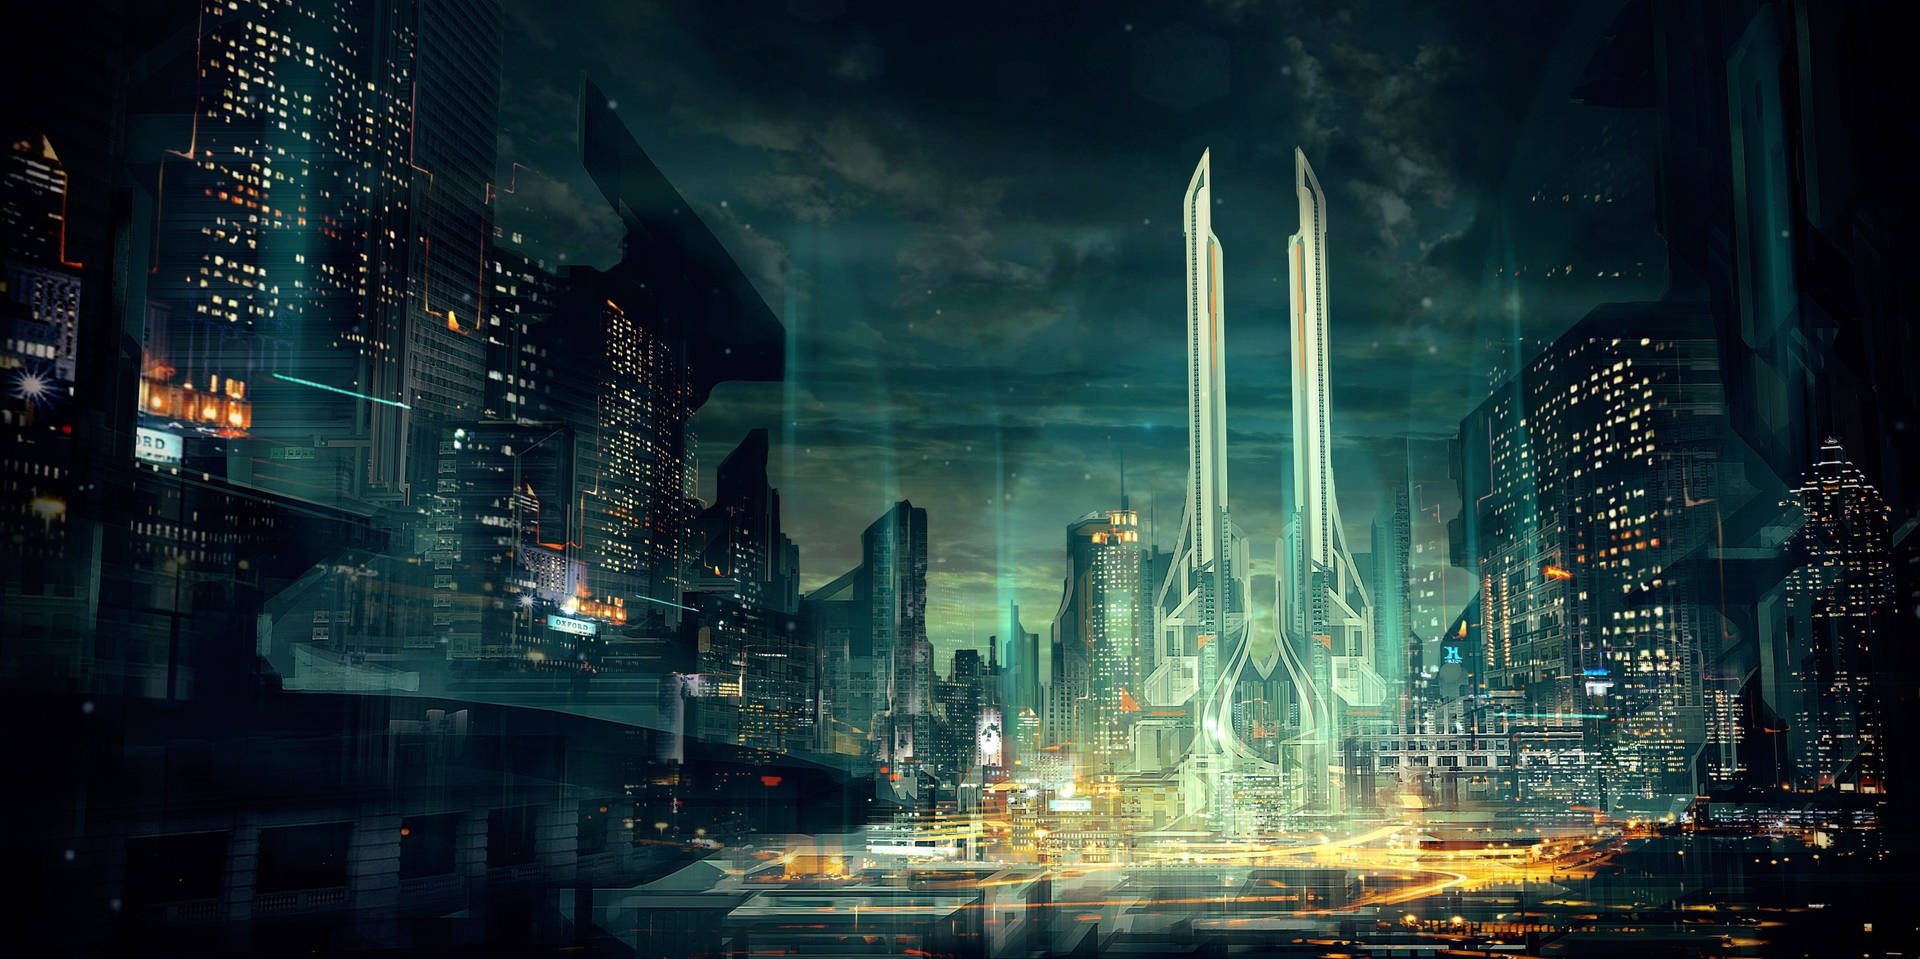 futuristic-city-at-night-lanrdbnbpr4aygii.jpg